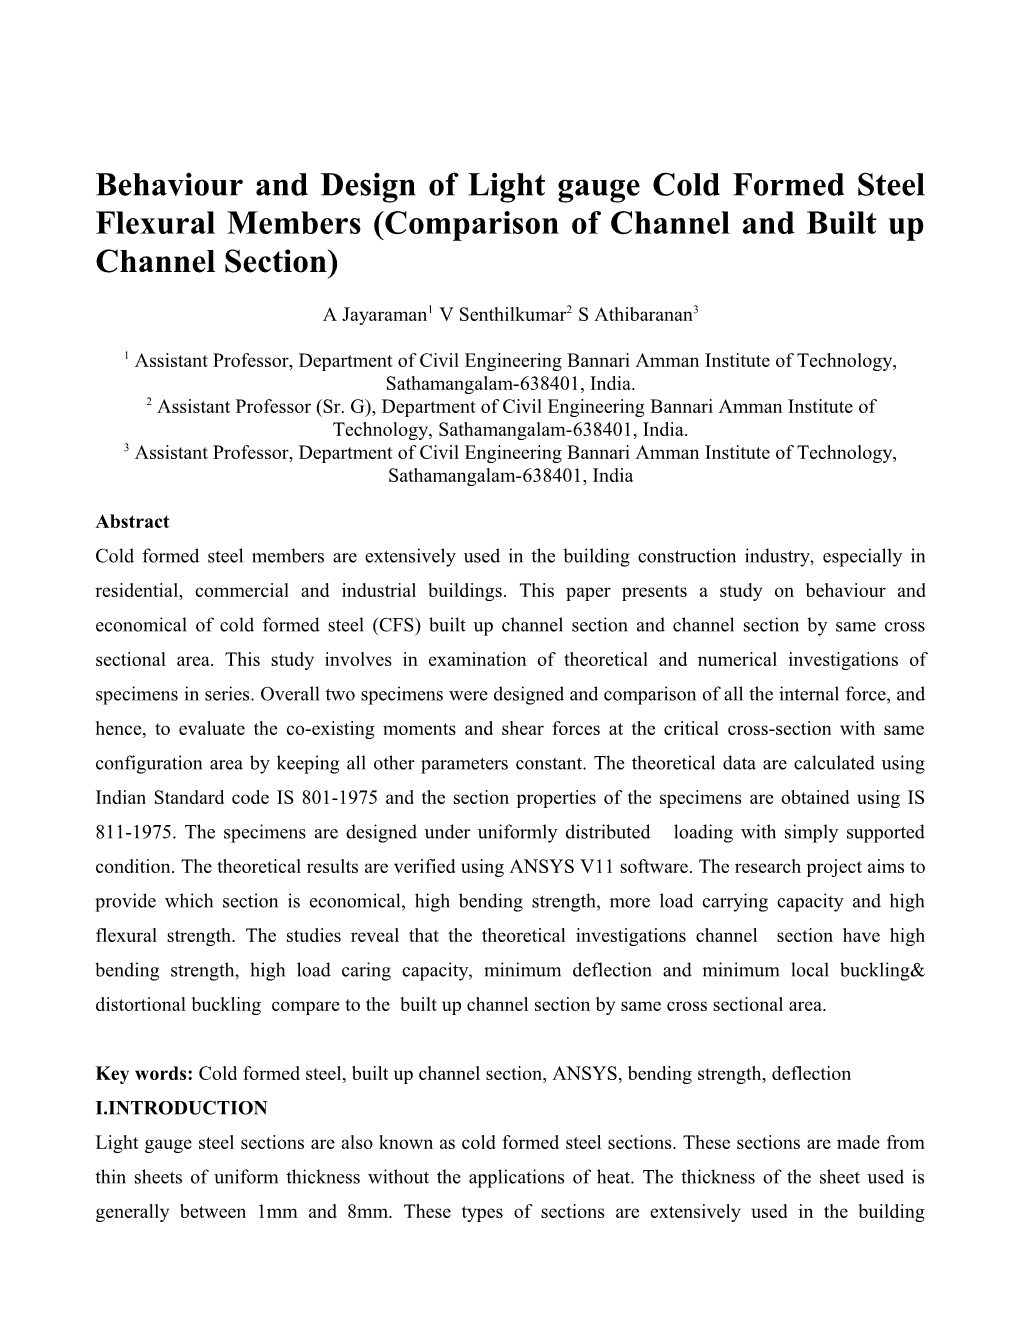 Behaviour and Design of Light Gauge Cold Formed Steel Flexural Members(Comparison of Channel